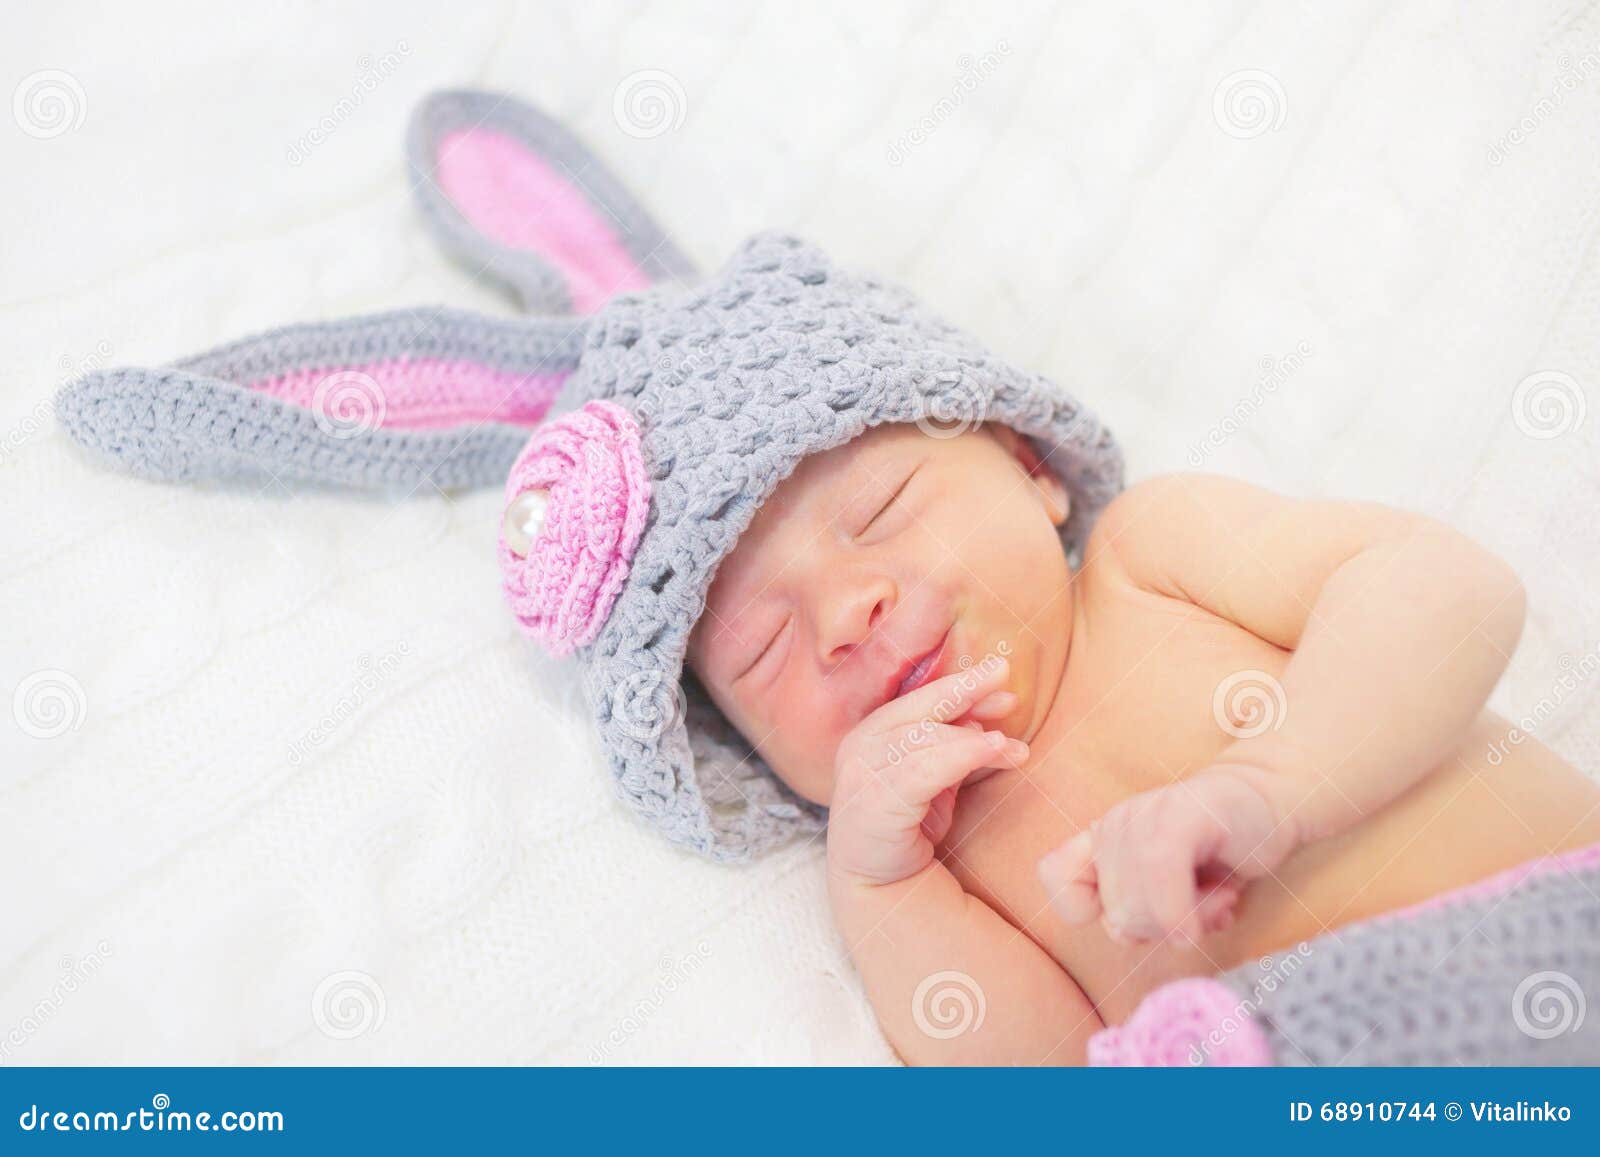 Sleeping Smiling Newborn Baby As Rabbit Stock Photo 